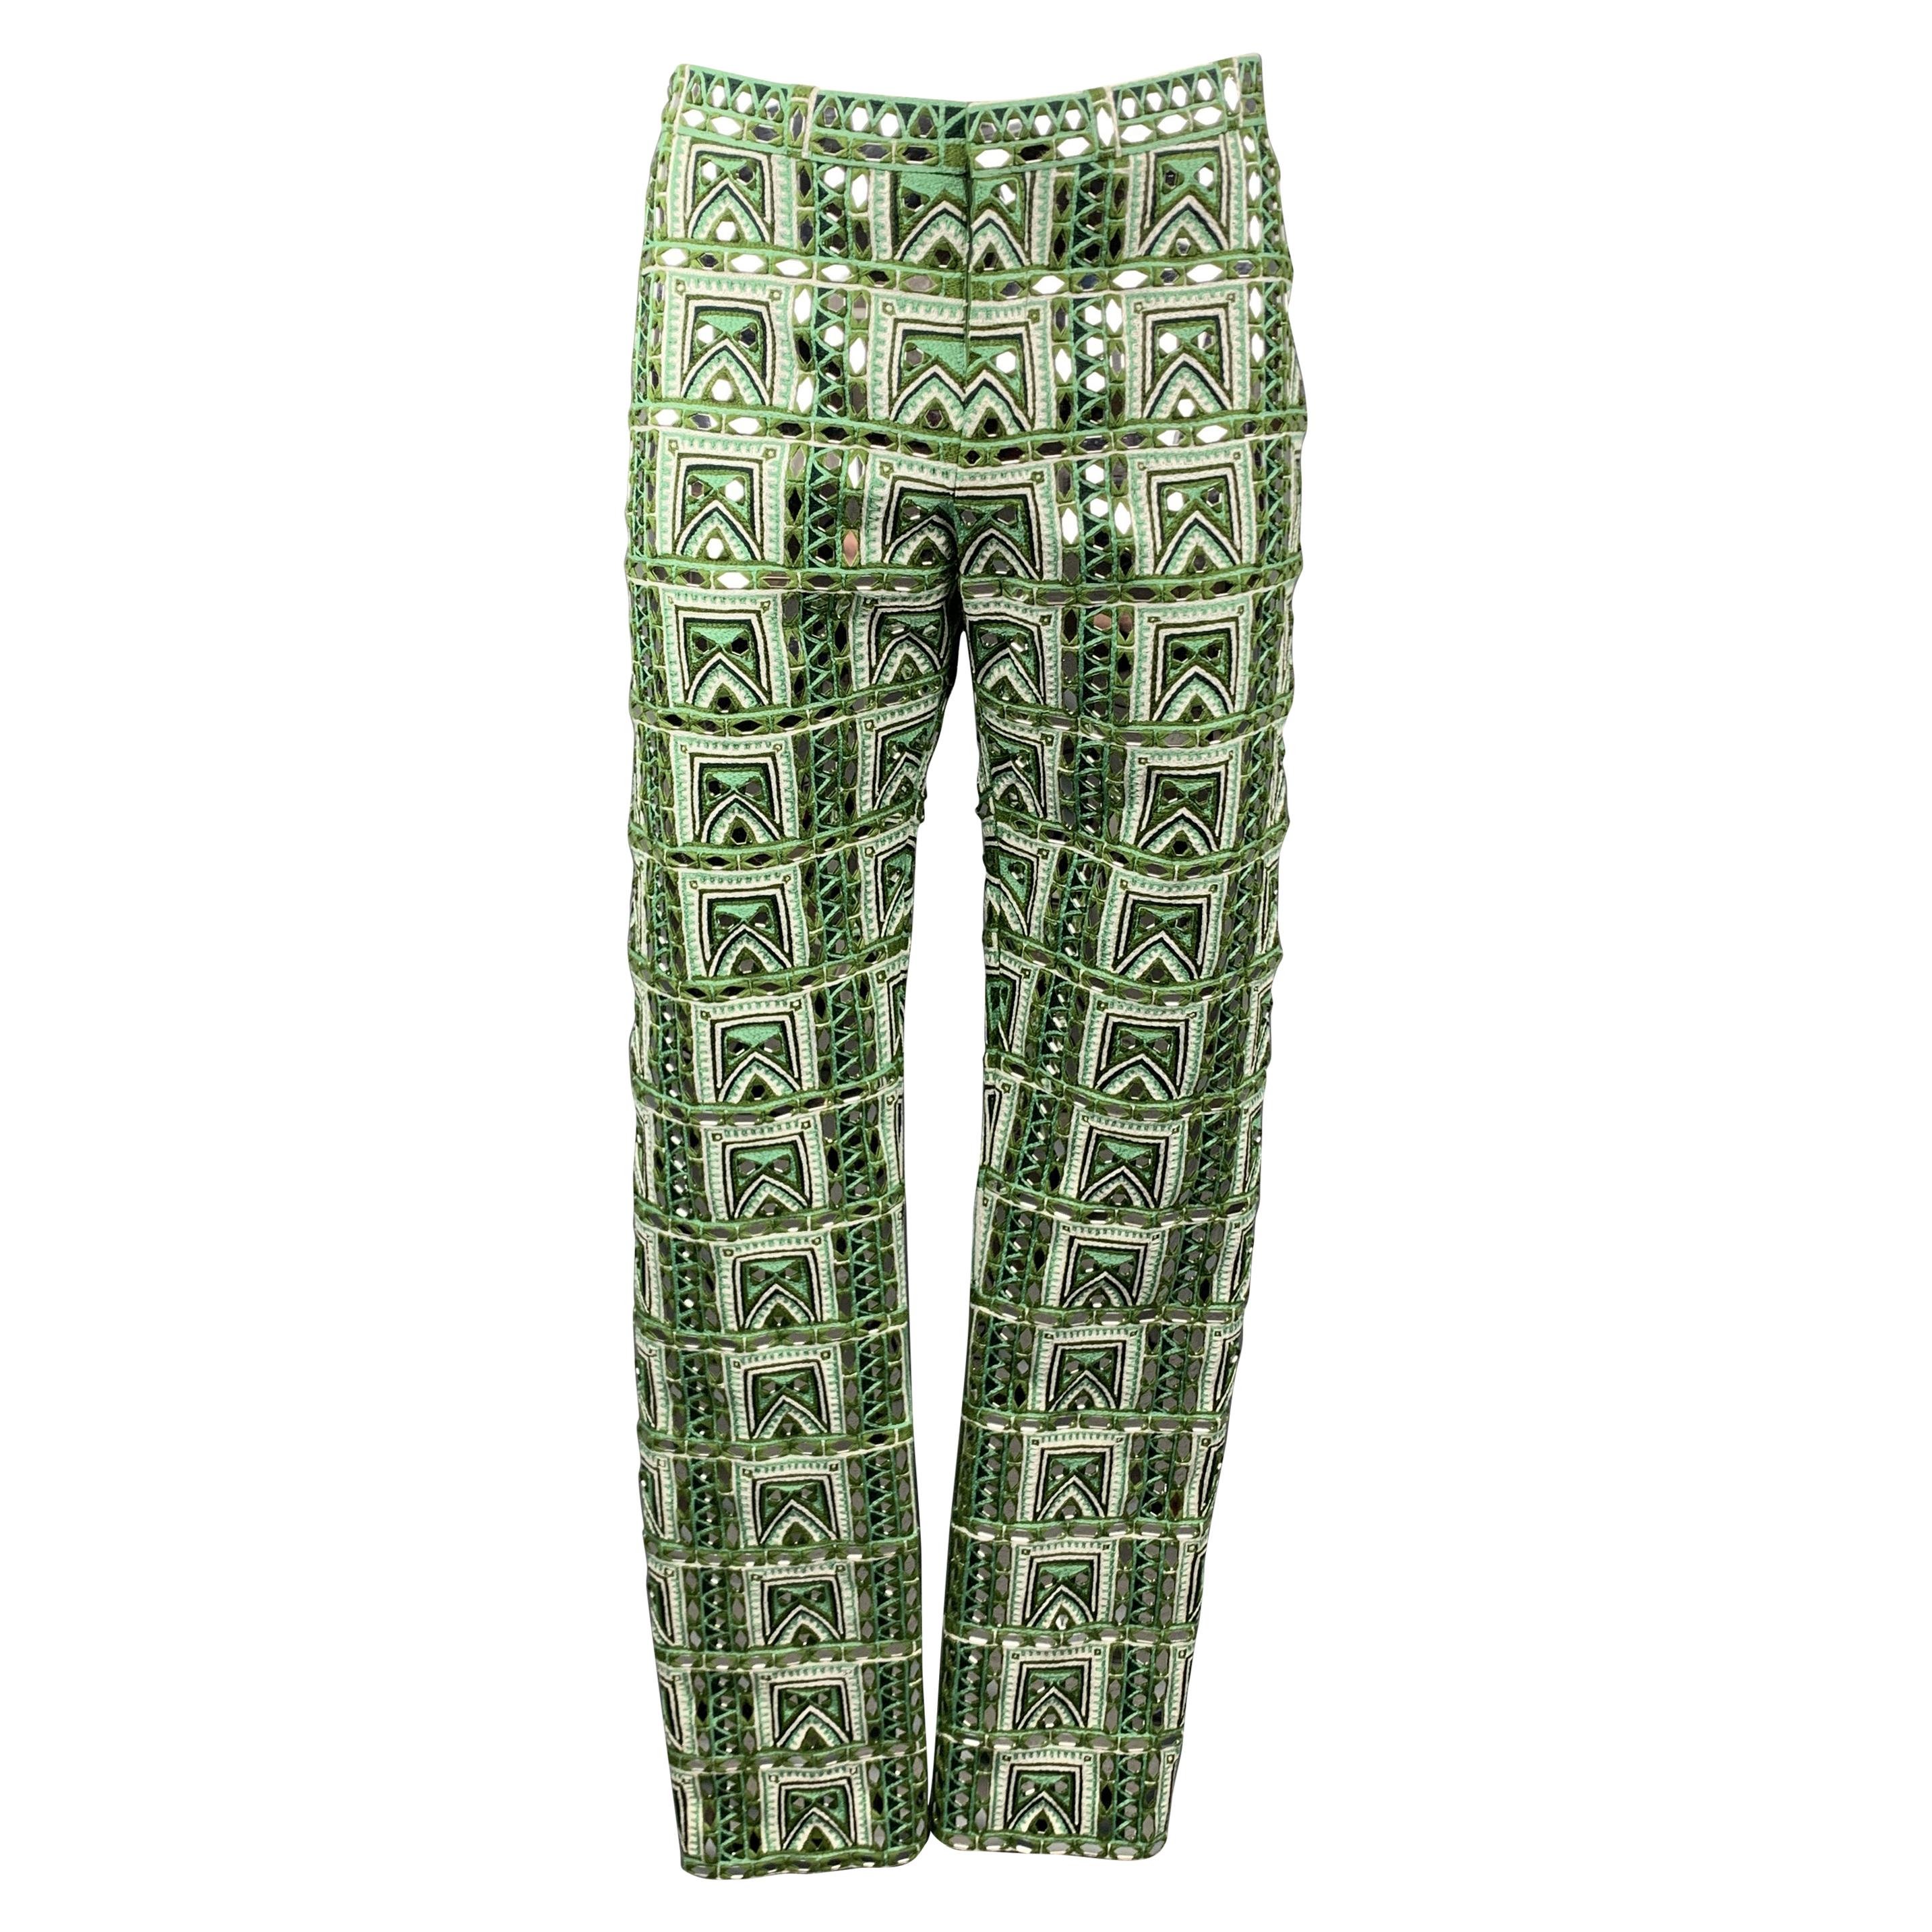 BURBERRY PRORSUM Fall 2015 Size 34 Green Fern Mirror Woven Rajasthani Pants